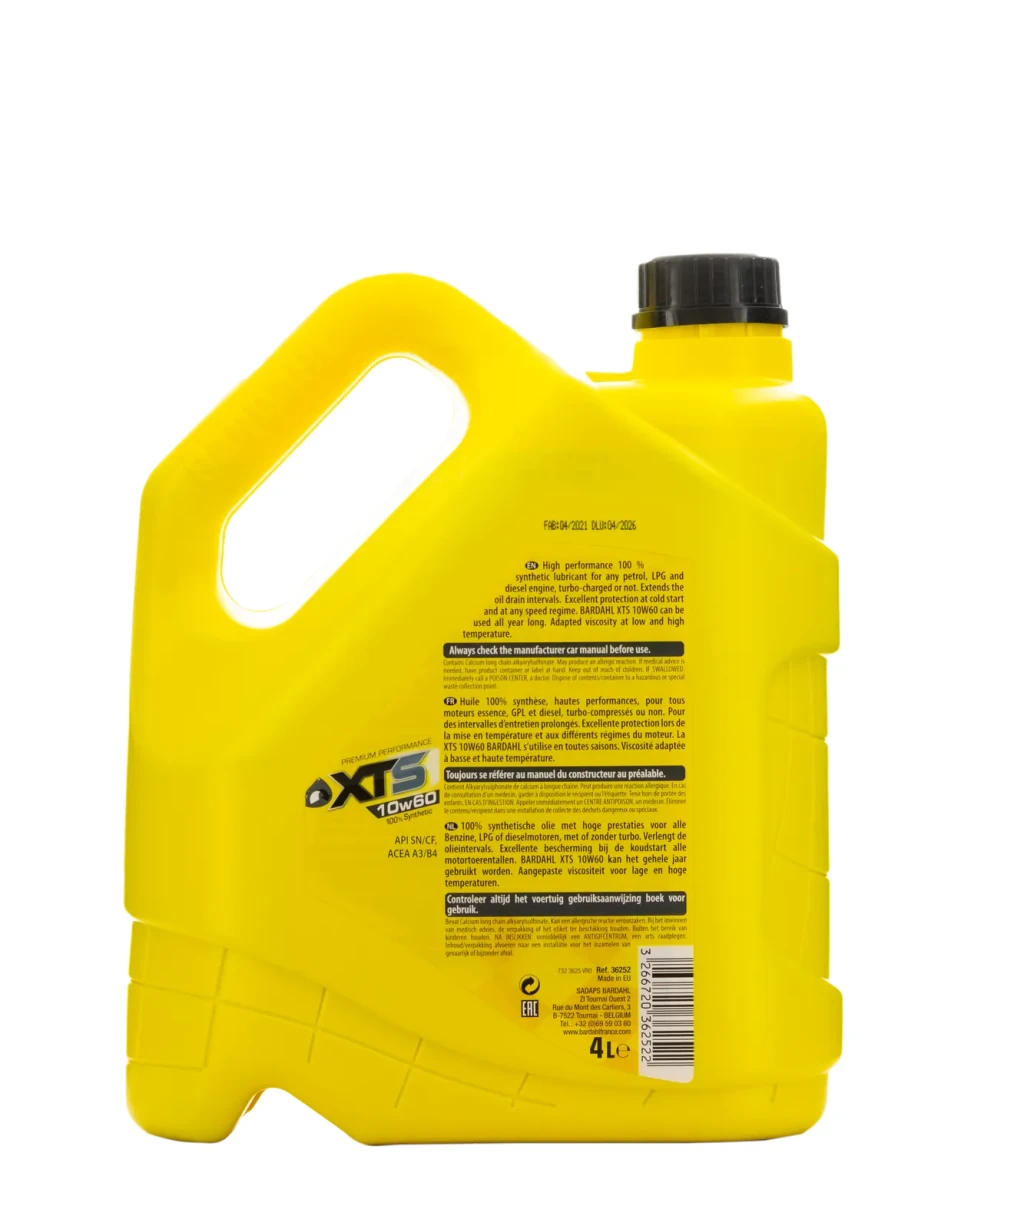 Моторное масло Bardahl XTS 10W-60 синтетическое 5 л